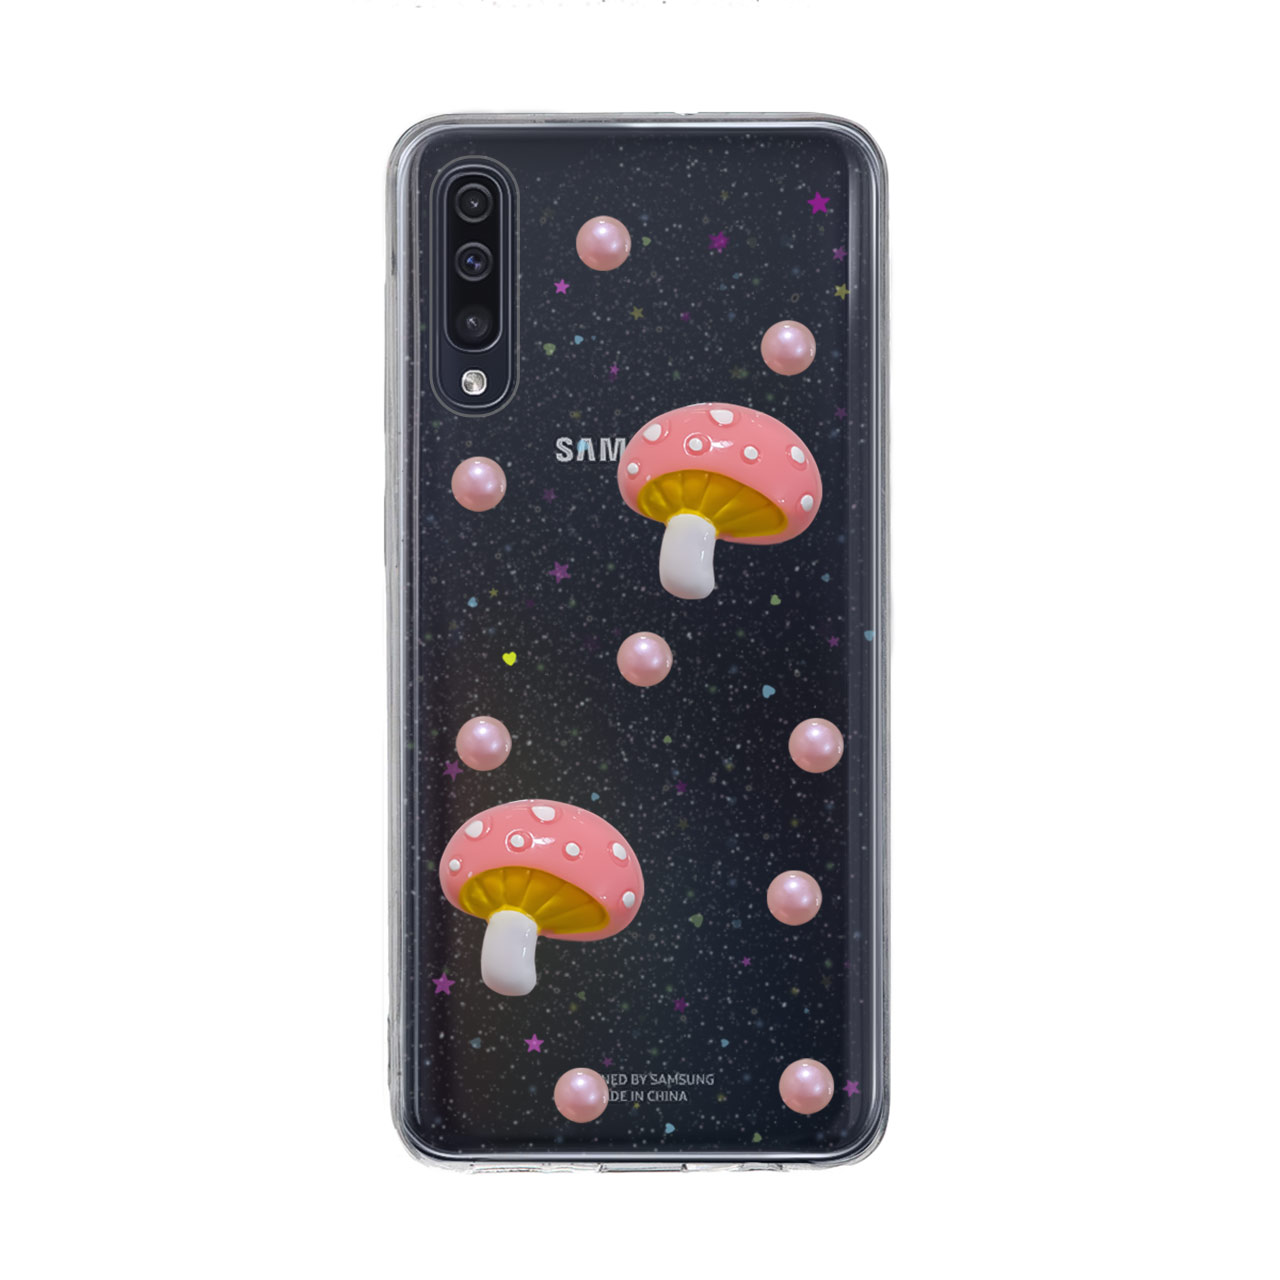 کاور دکین مدل Nitid طرح قارچ مناسب برای گوشی موبایل سامسونگ Galaxy A50 /A30s / A50s